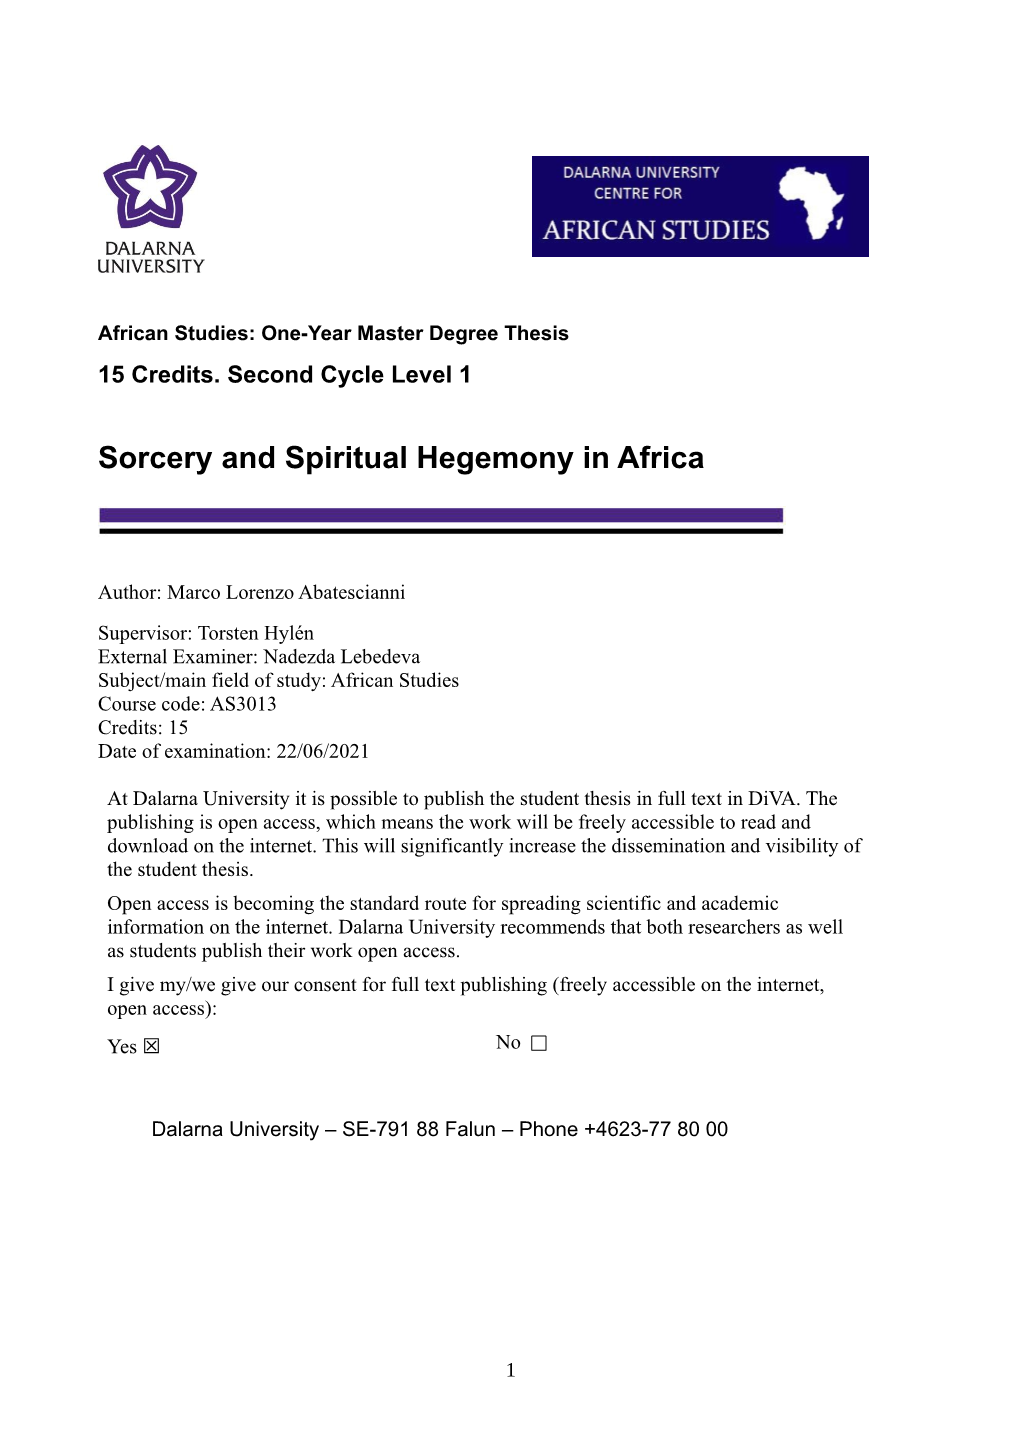 Sorcery and Spiritual Hegemony in Africa